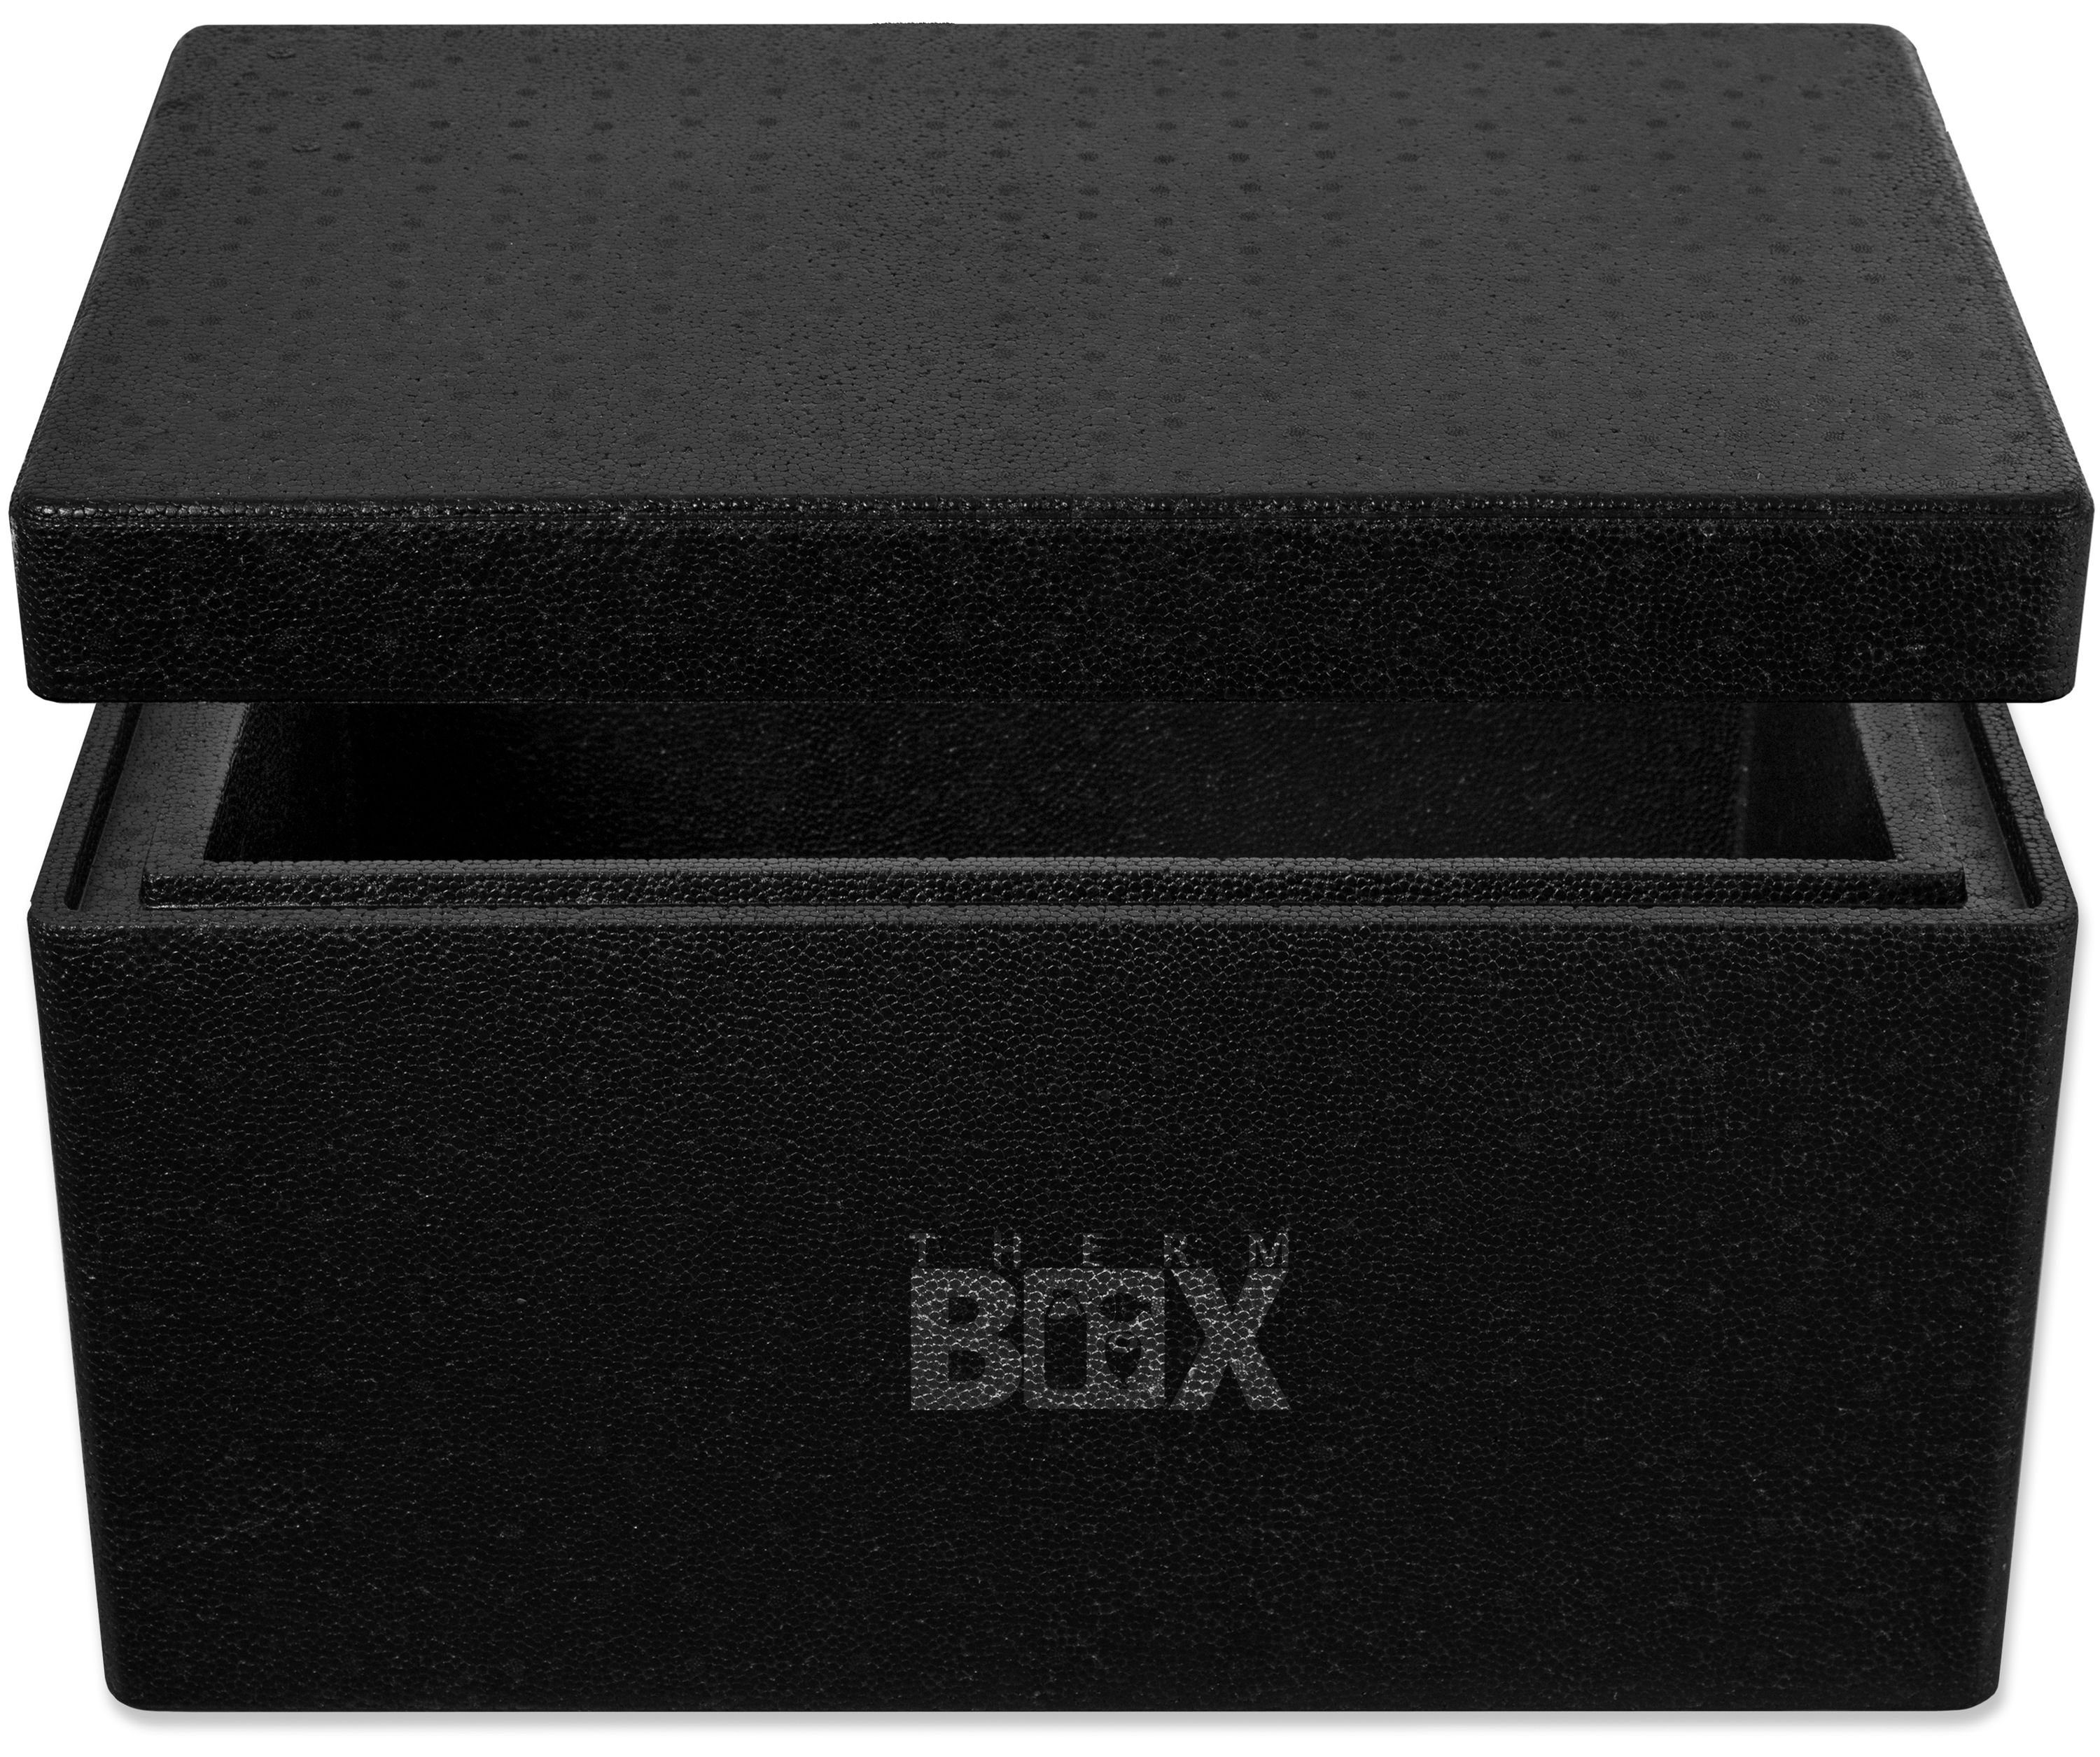 THERM-BOX Thermobehälter Profibox 37B, Styropor-Piocelan, (0-tlg., Box mit Deckel im Karton), Wand: 4,0cm Volumen: 37,5L Innenmaß:51x30x24cm Wiederverwendbar Isolierbox Thermobox Kühlbox Warmhaltebox Styroporbox | Thermobehälter